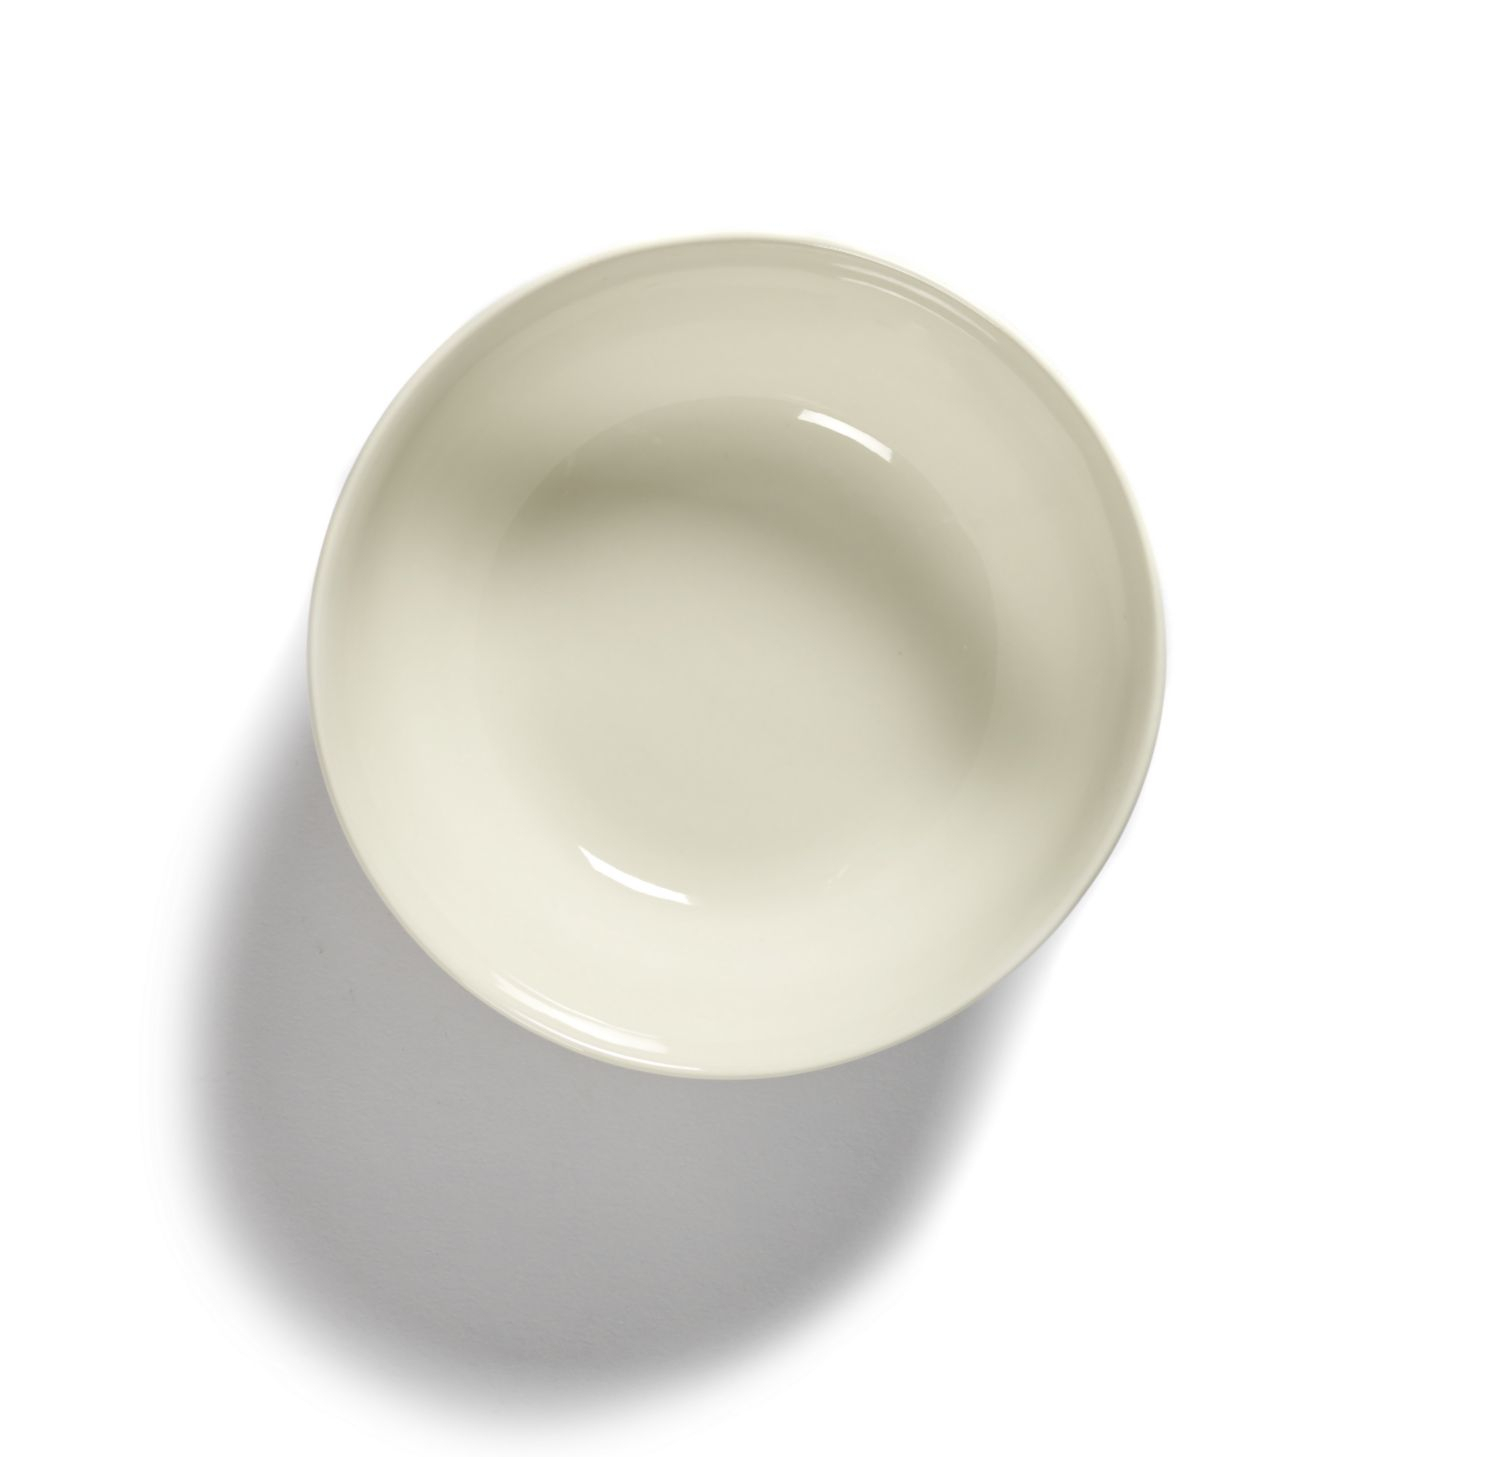 4x Feast Schüssel Groß Keramik Weiß